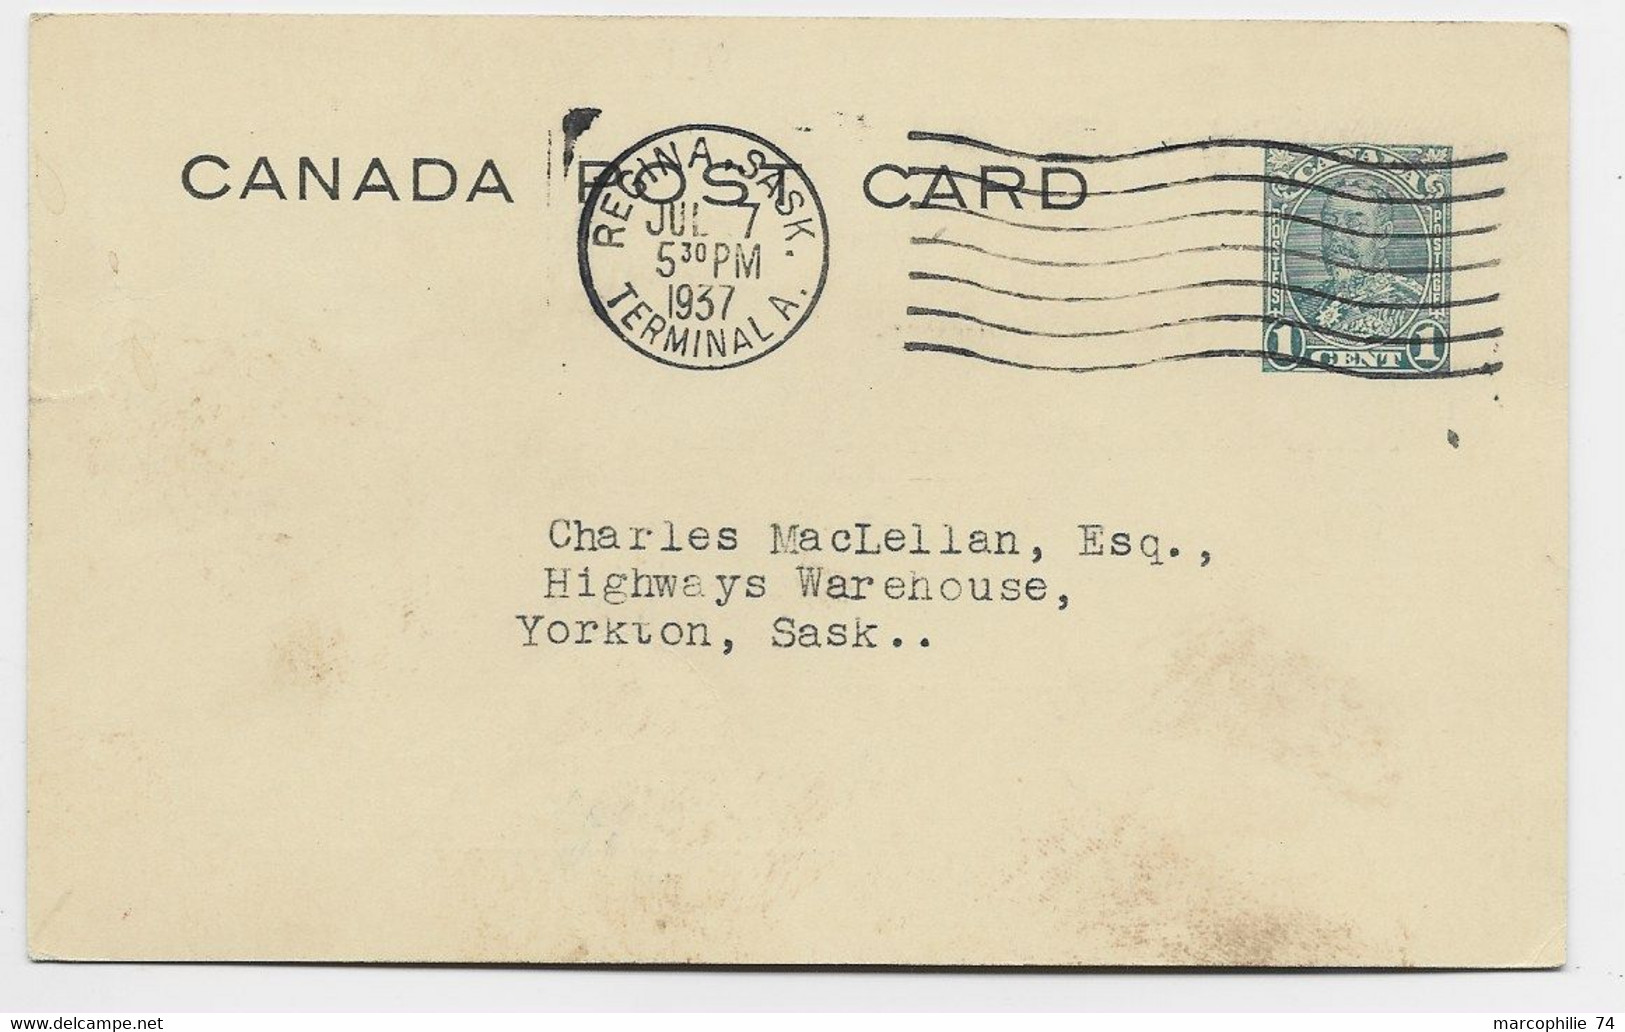 CANADA ENTIER 1 CENT POST CARD REGINA SASK JUL 7 1937 REPIQUAGE MOTOR LICENSE OFFICE - 1903-1954 Kings